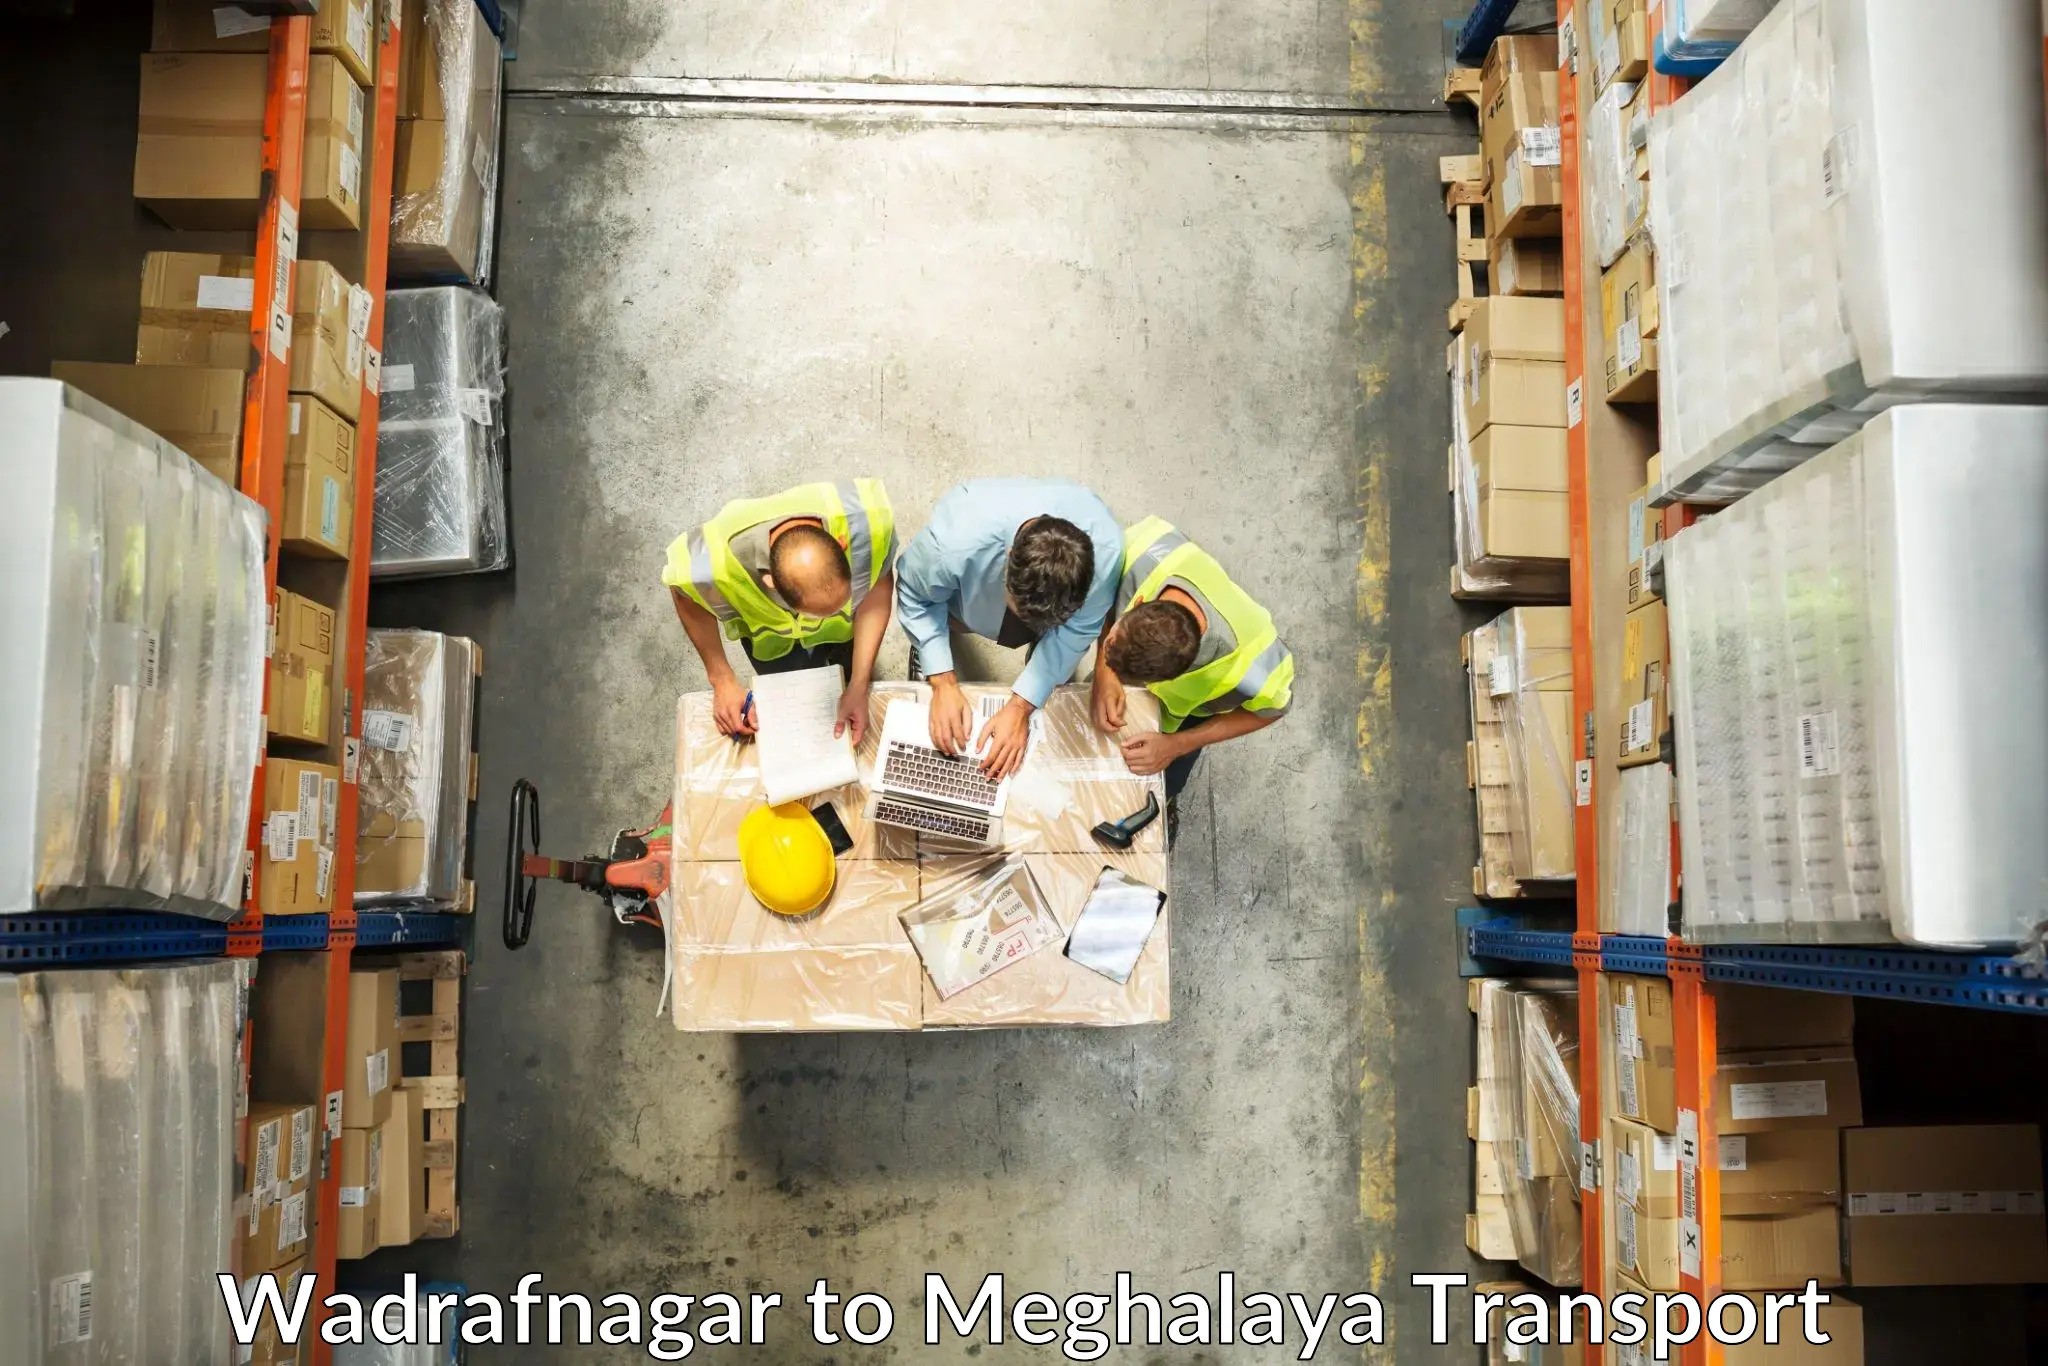 Part load transport service in India Wadrafnagar to Nongpoh